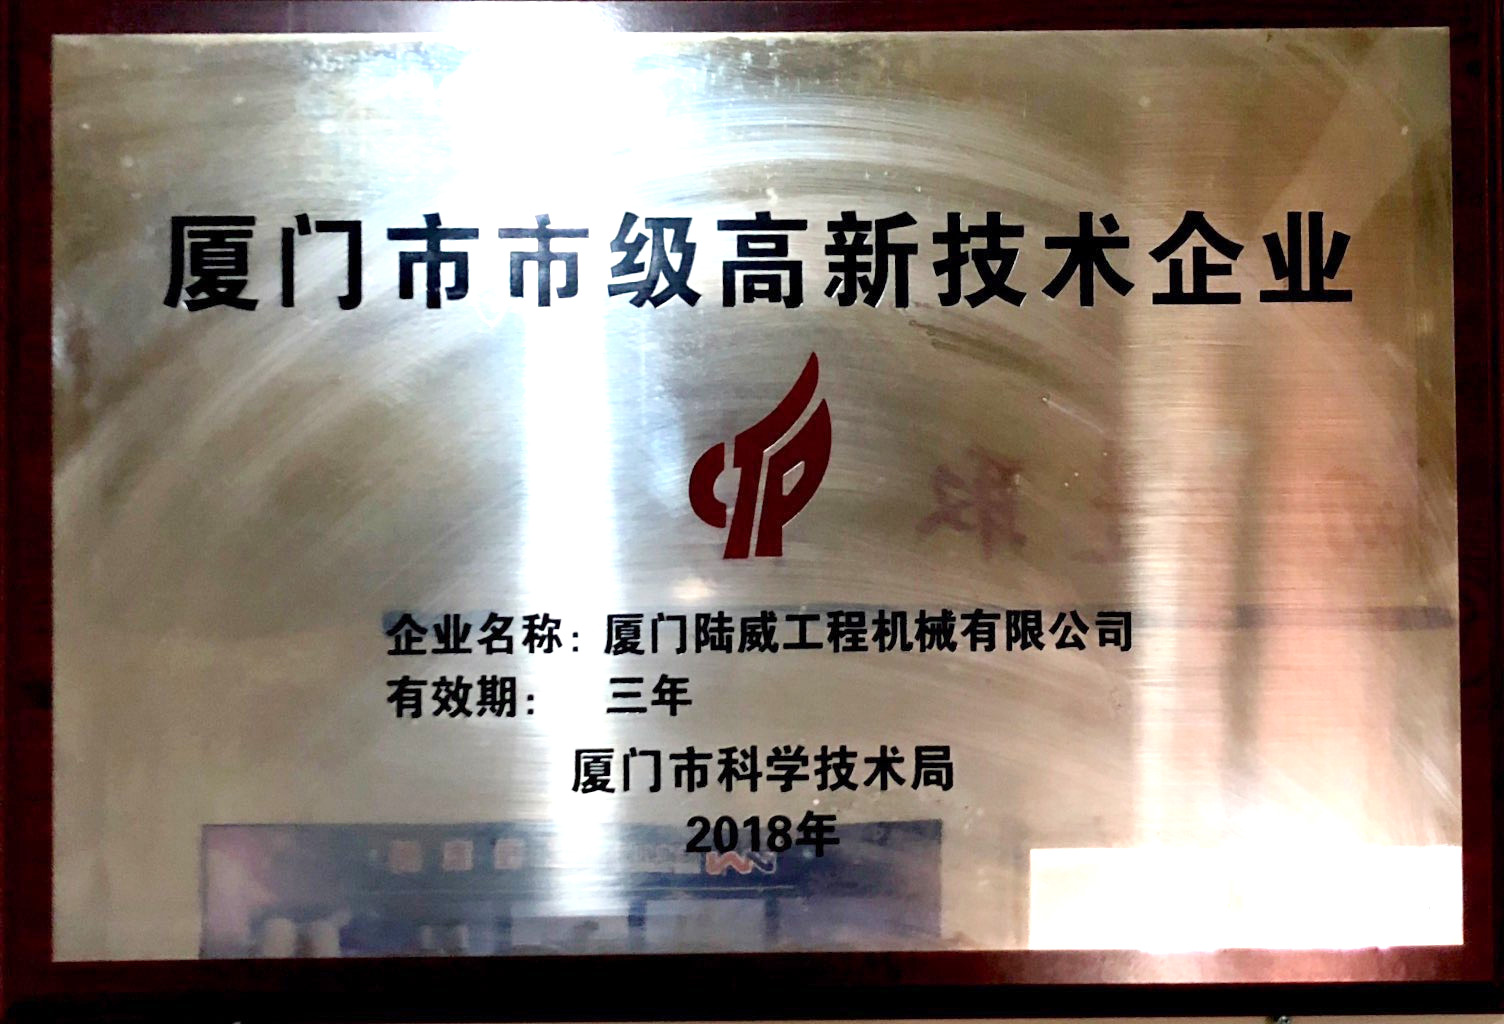 Xiamen high-tech enterprises